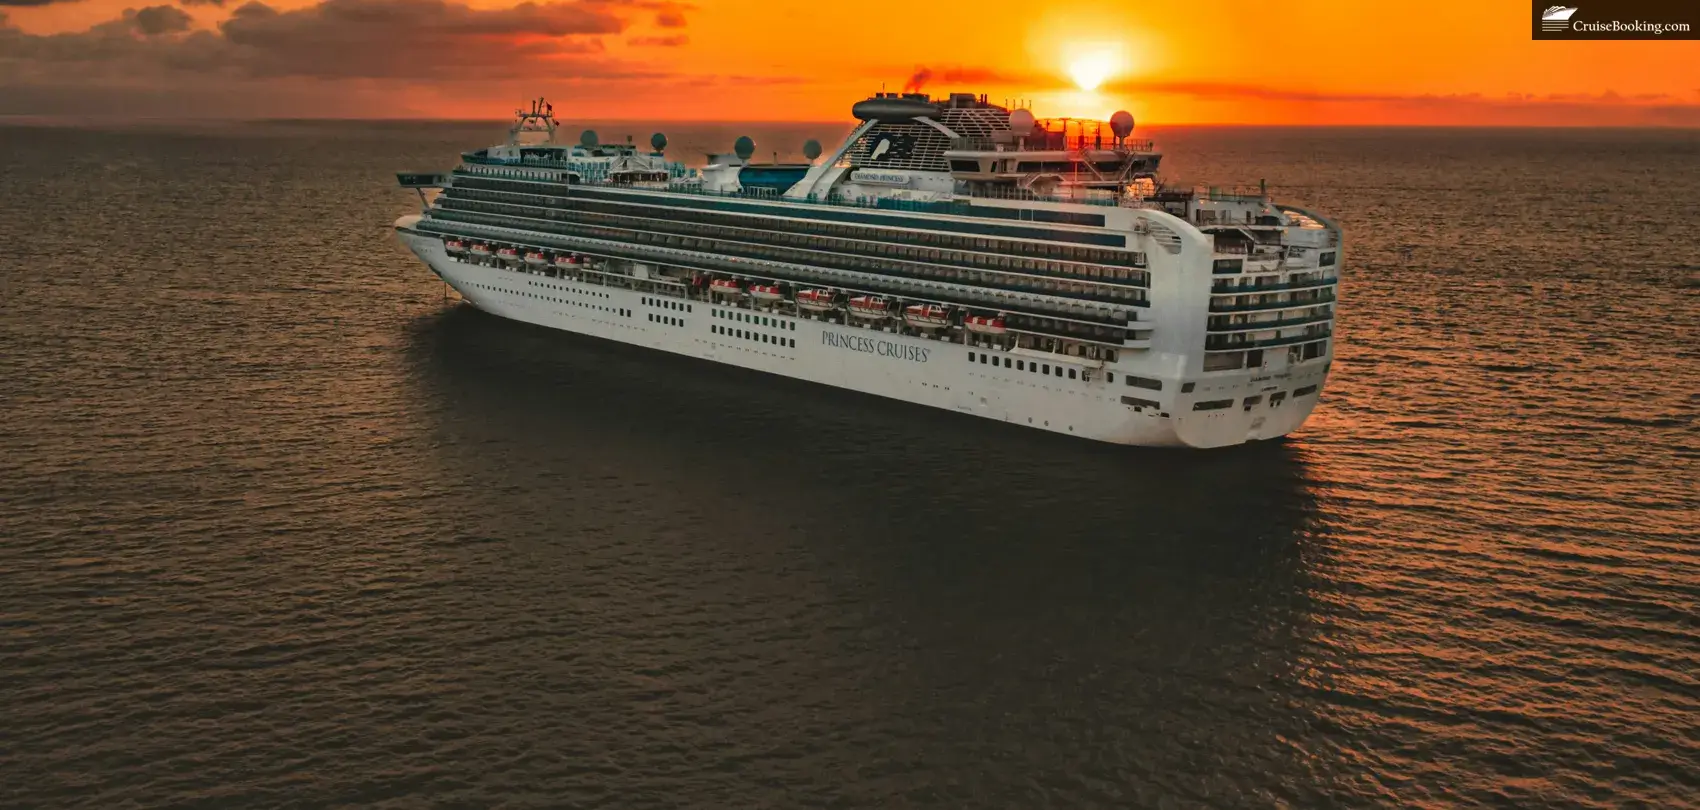 The Princess Cruises ship leaving Puerto Vallarta